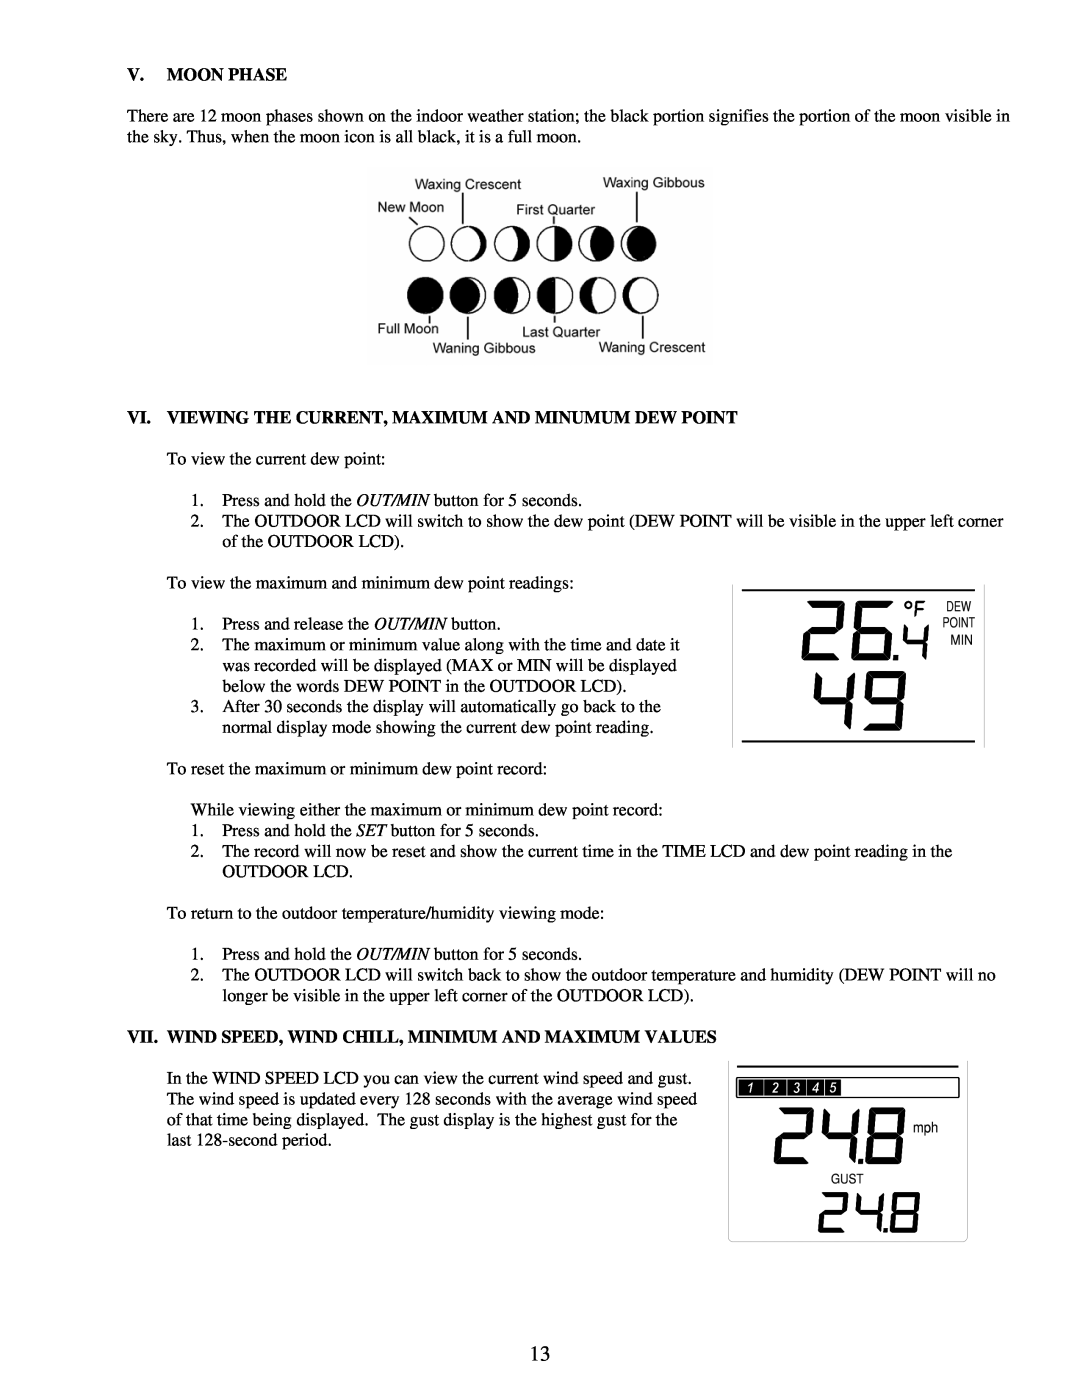 La Crosse Technology WS-7395U instruction manual V.Moon Phase 